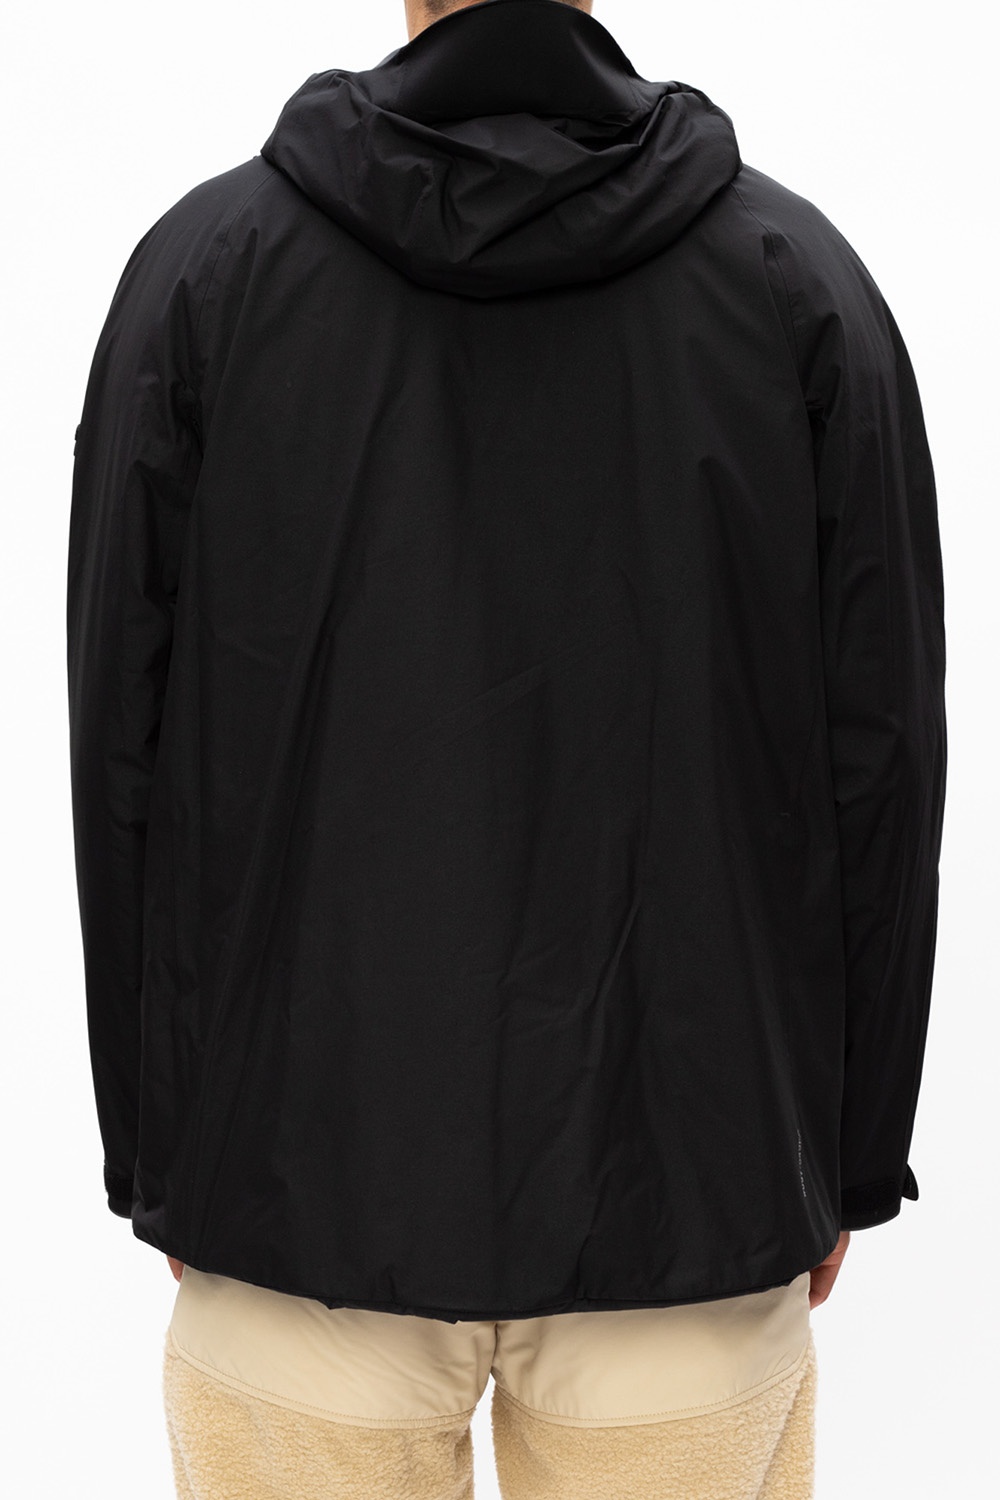 Moncler Grenoble 'Linth' hooded jacket | Men's Clothing | Vitkac